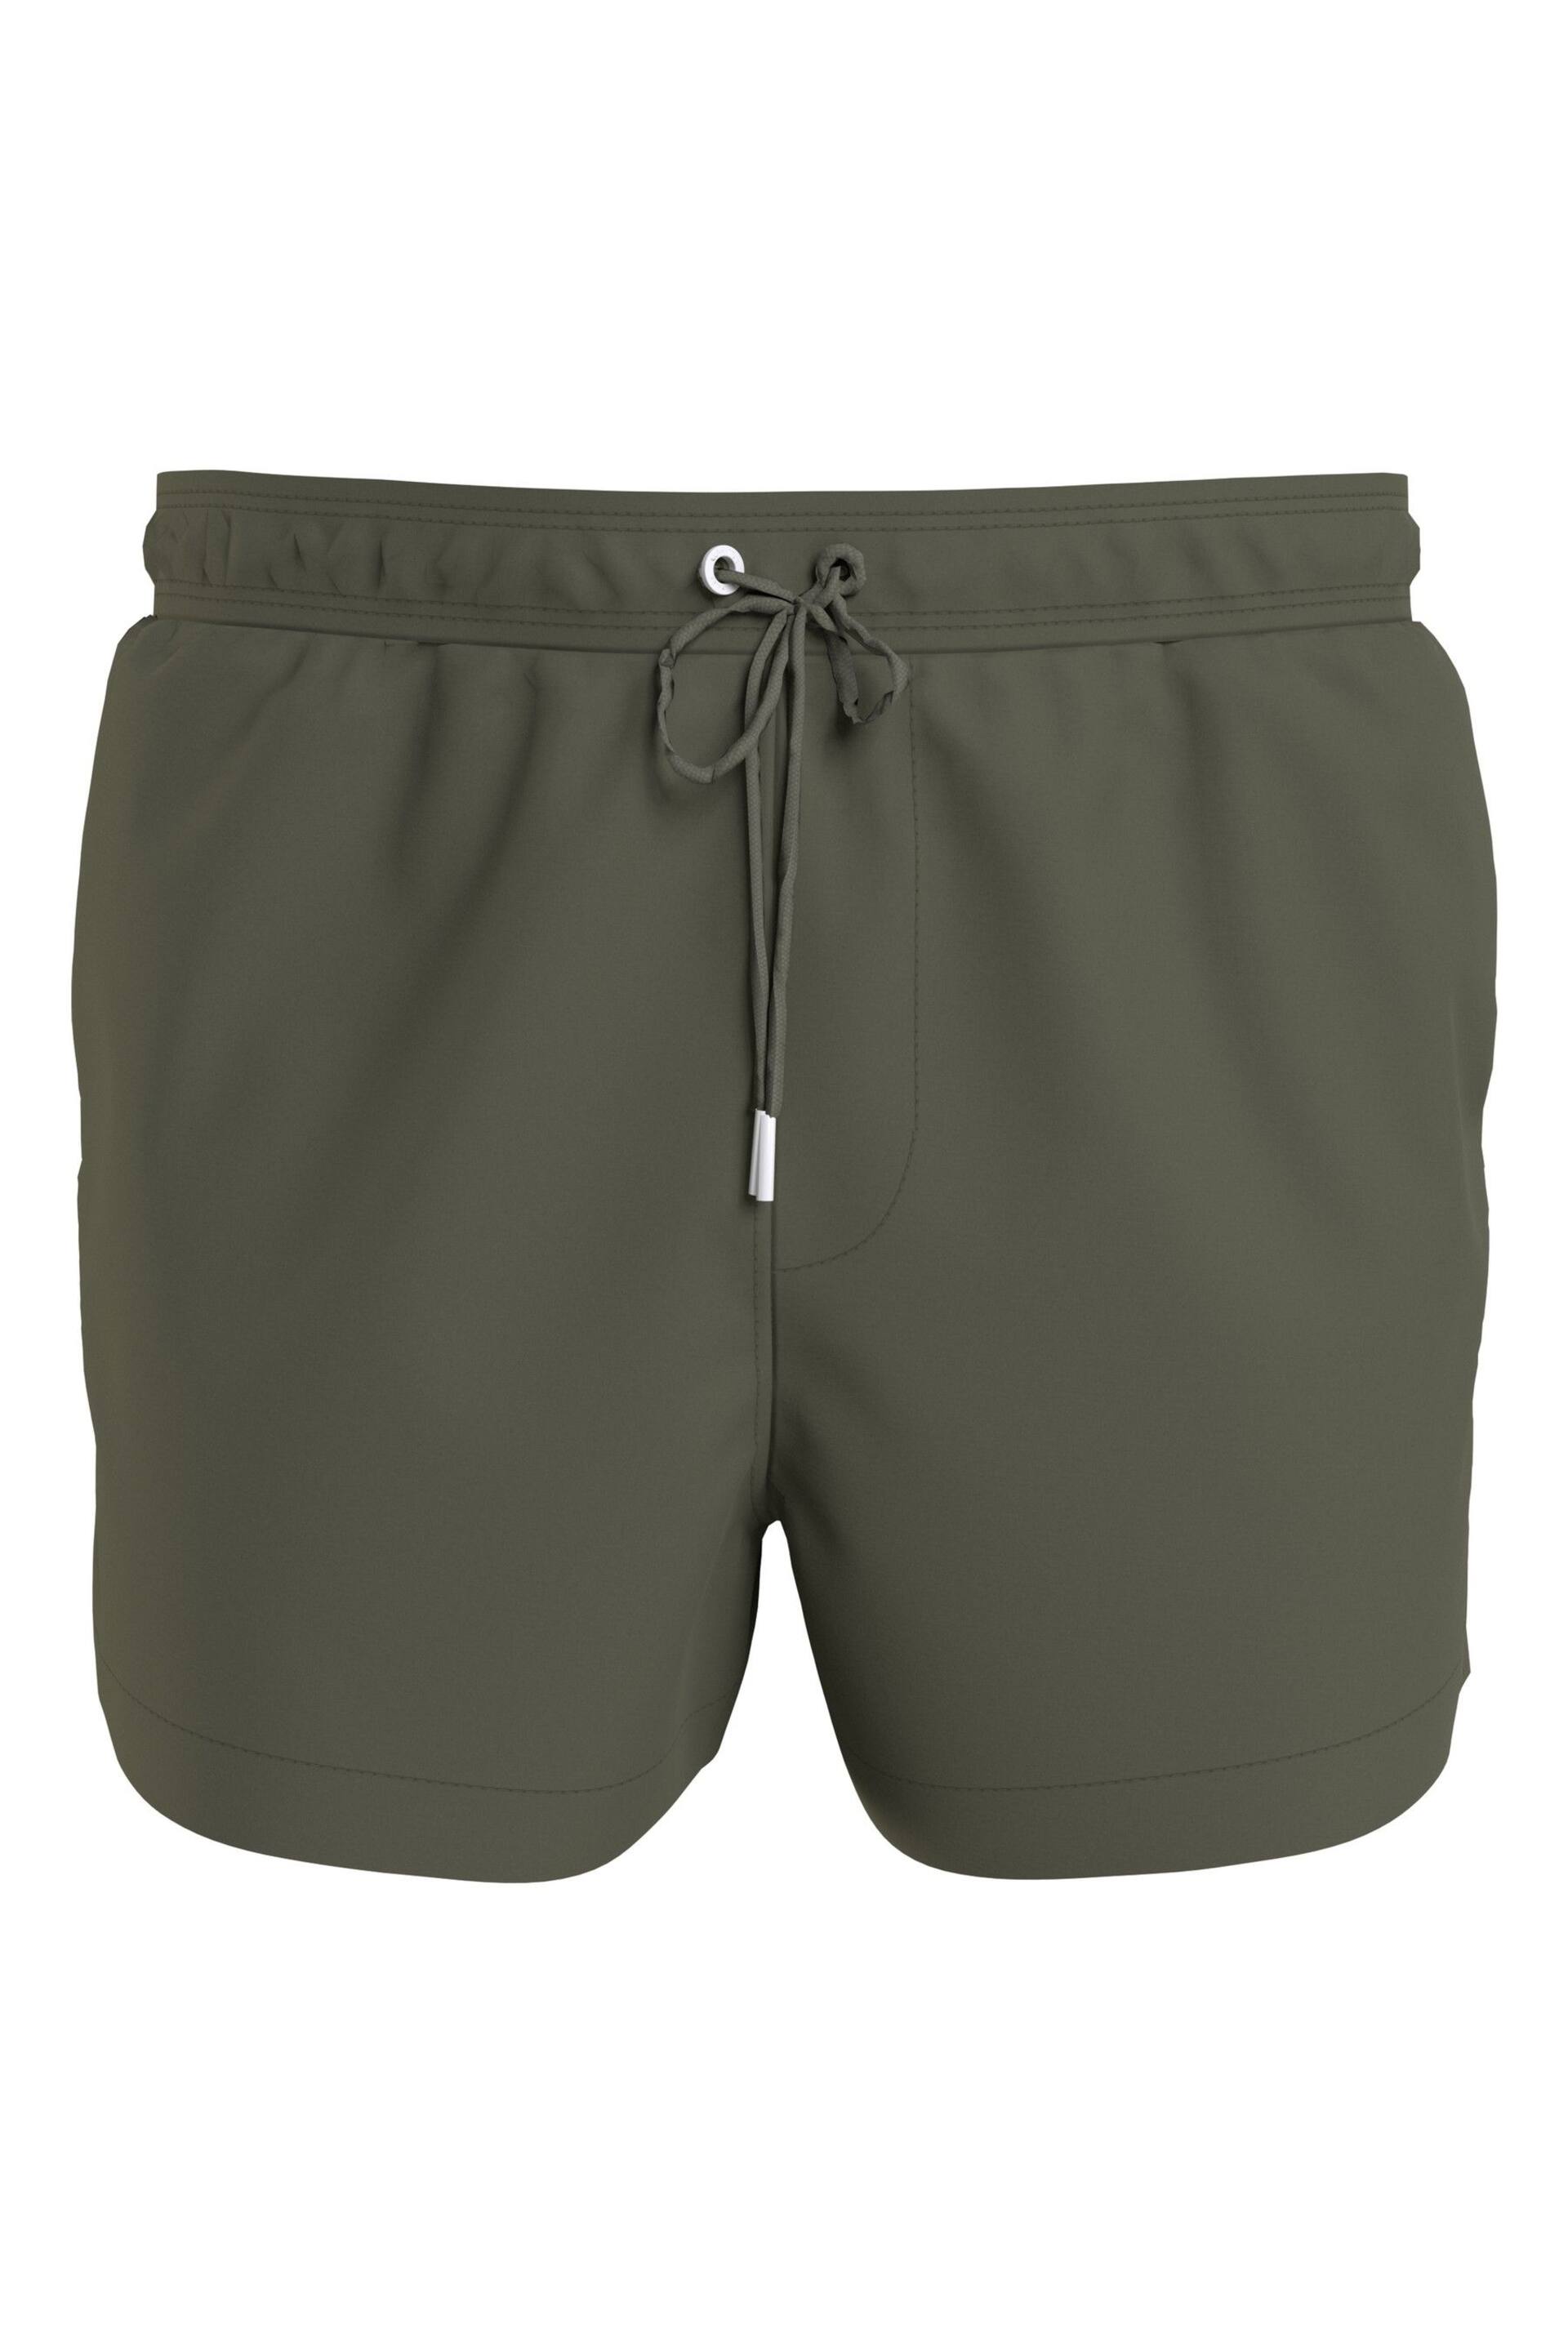 Calvin Klein Green Plain Swim Shorts - Image 1 of 4